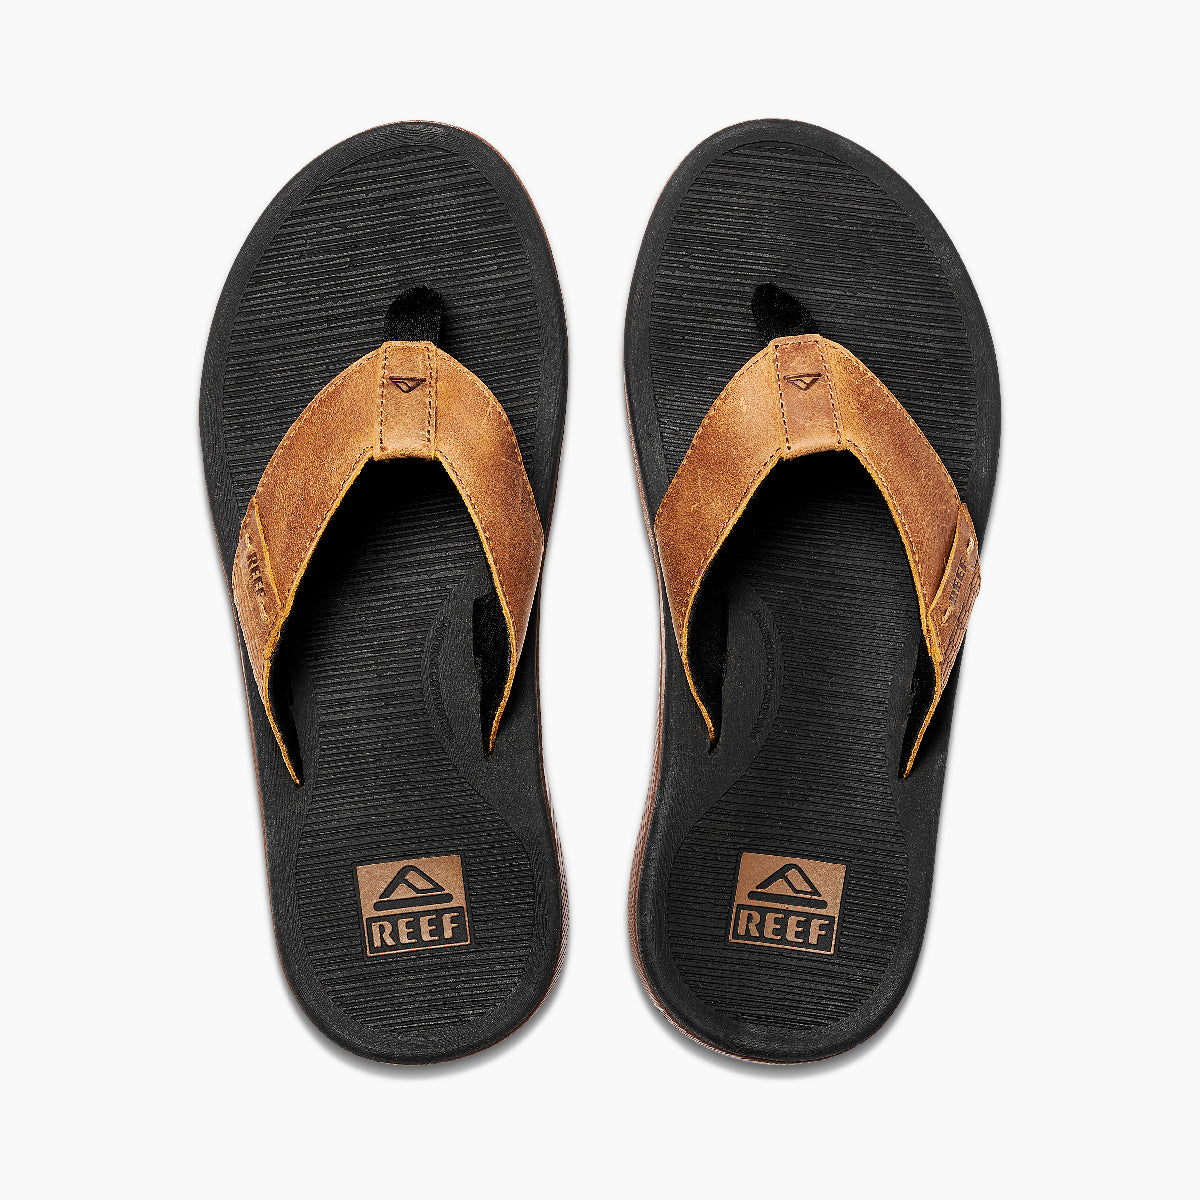 Reef Santa Ana LE Leather Sandals - Black and Tan Mens Footwear